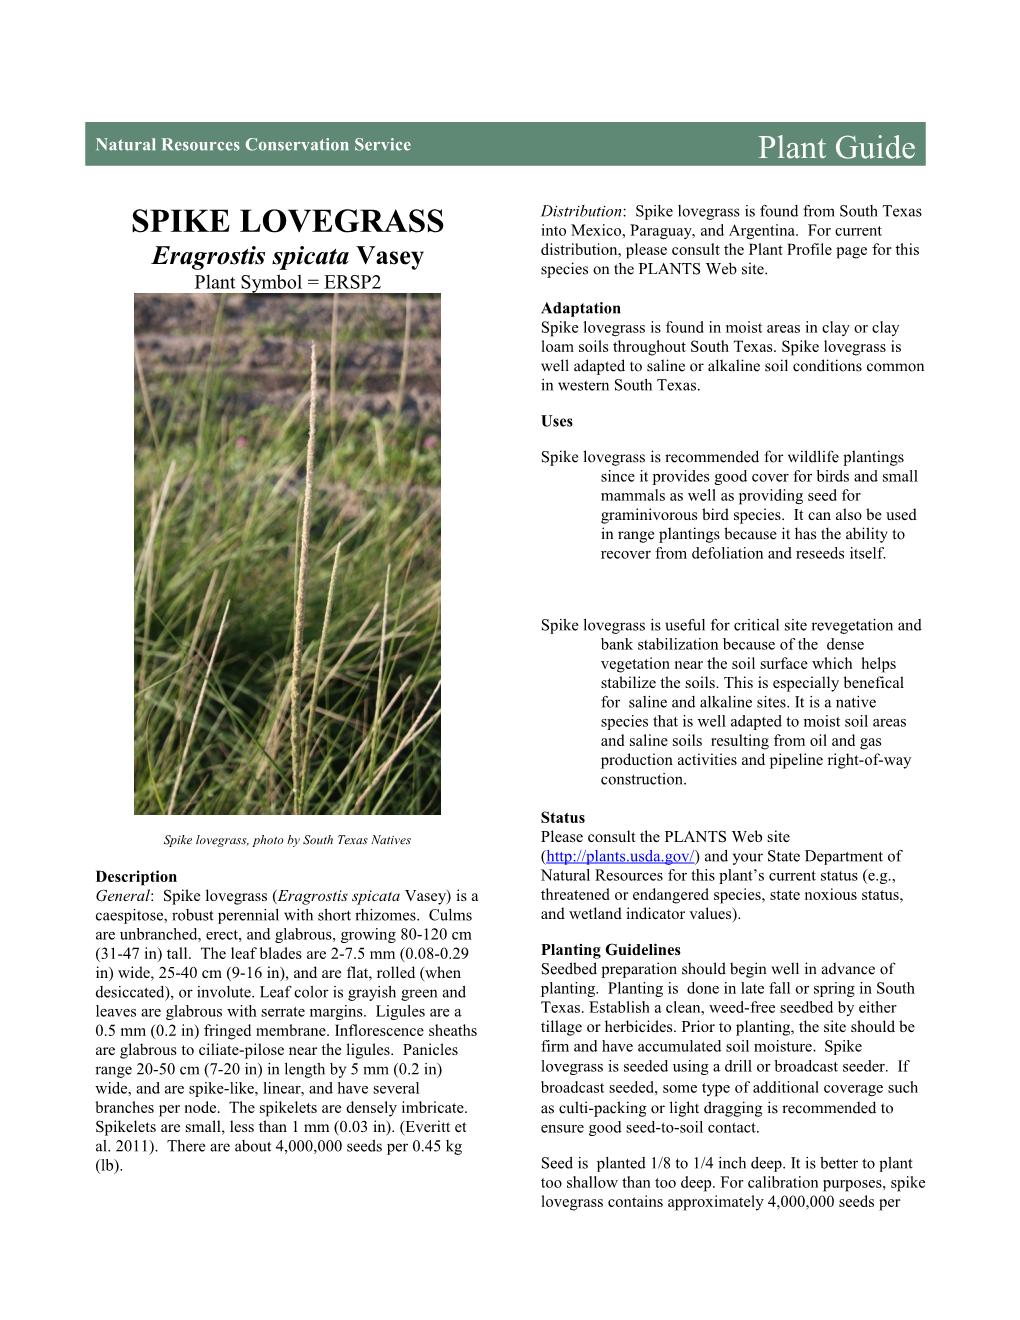 Spike Lovegrass (Eragrostis Spicata) Plant Guide